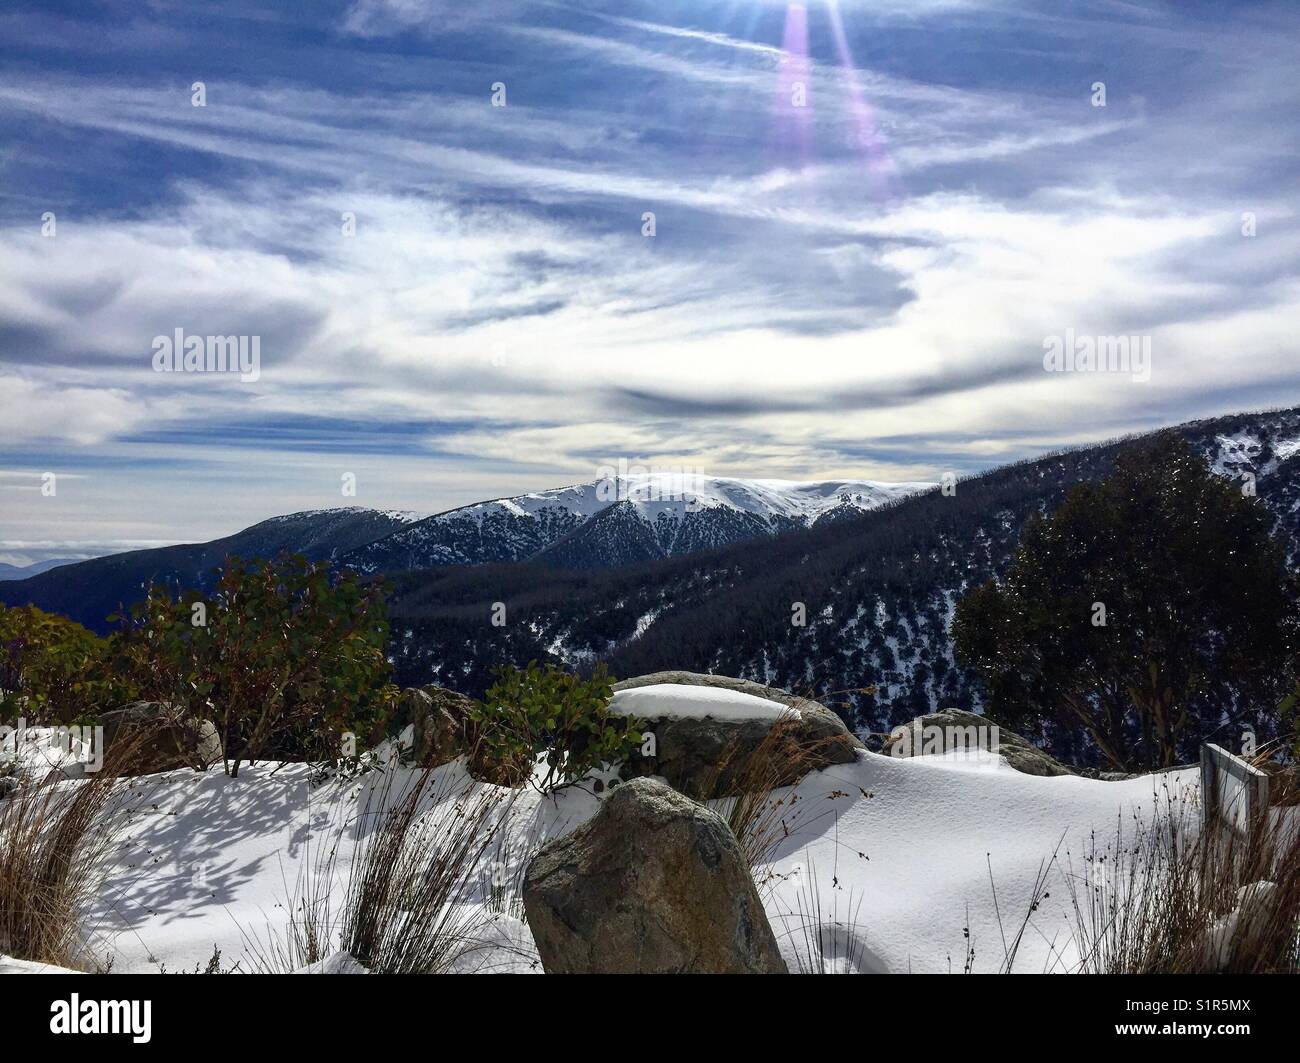 Snowy Mountain Scene Stock Photo